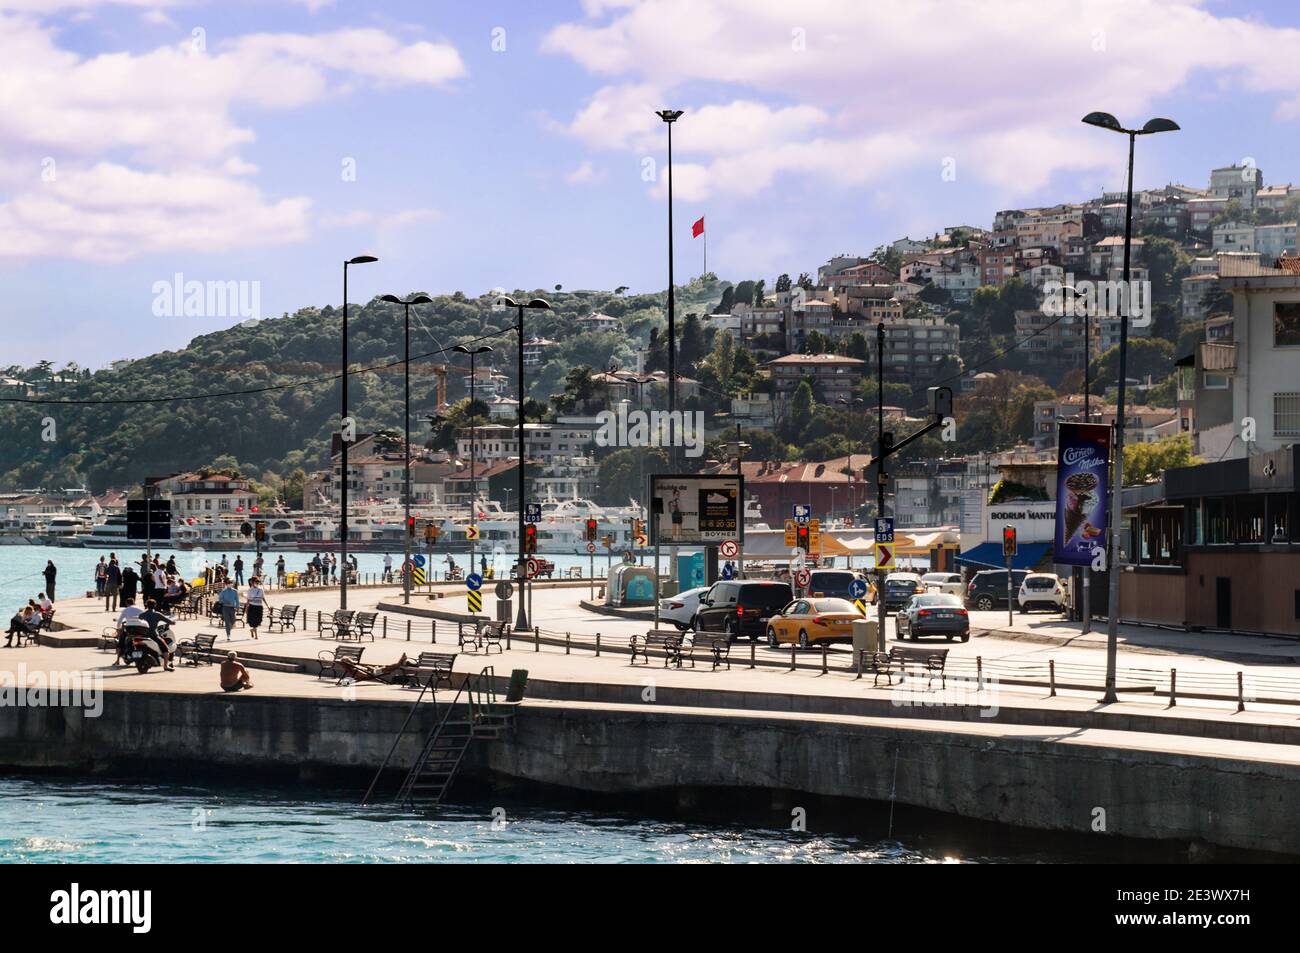 ISTANBUL, TURKEY - 09 07 2020: Sunny day view on Bosporus Strait waterfront on Bebek Arnavutkoy Cd street in the Besiktas district of Istanbul Stock Photo